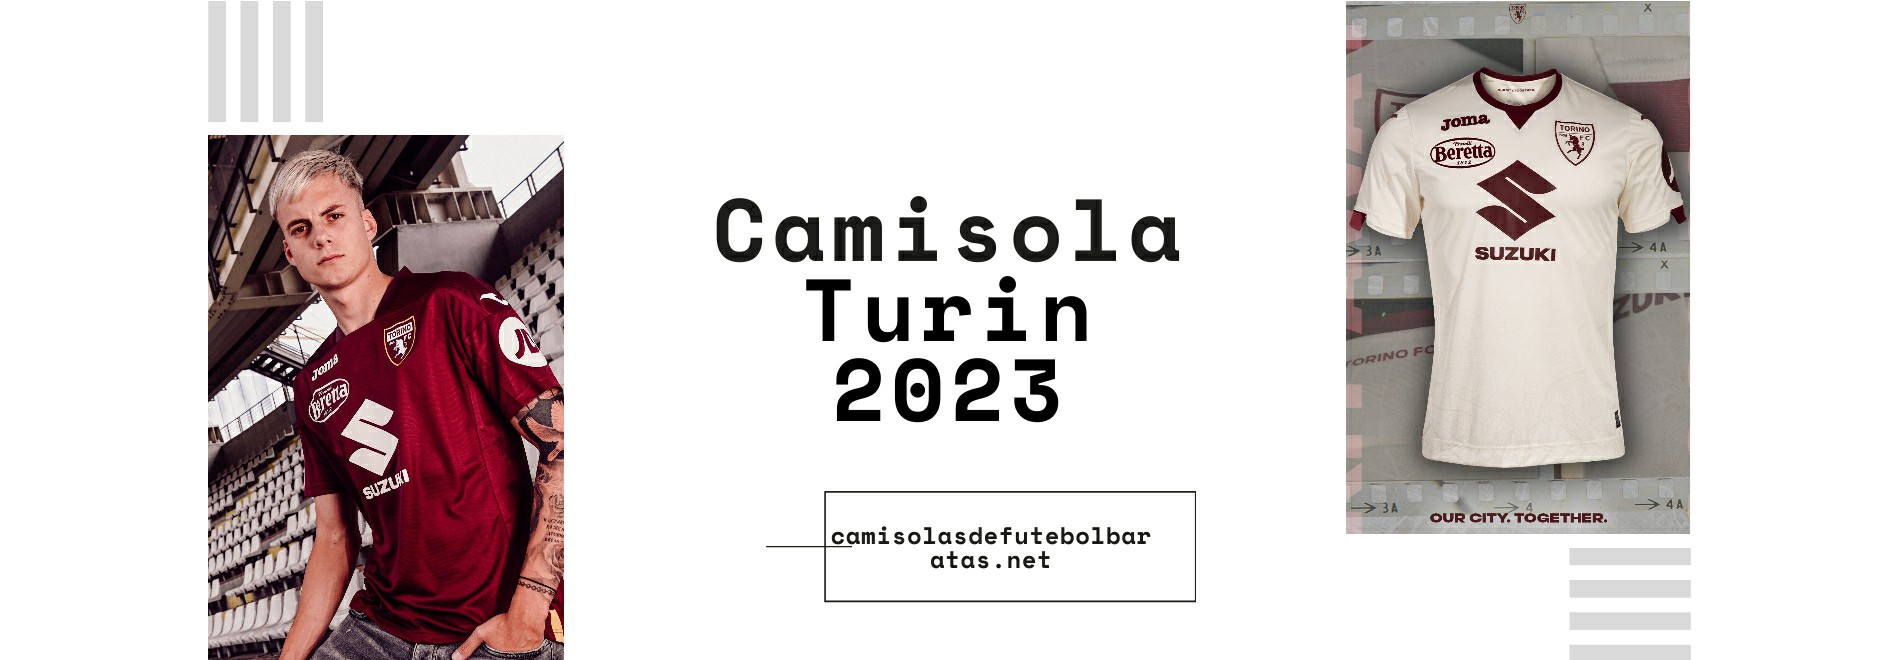 Camisola Turin 2023-2024